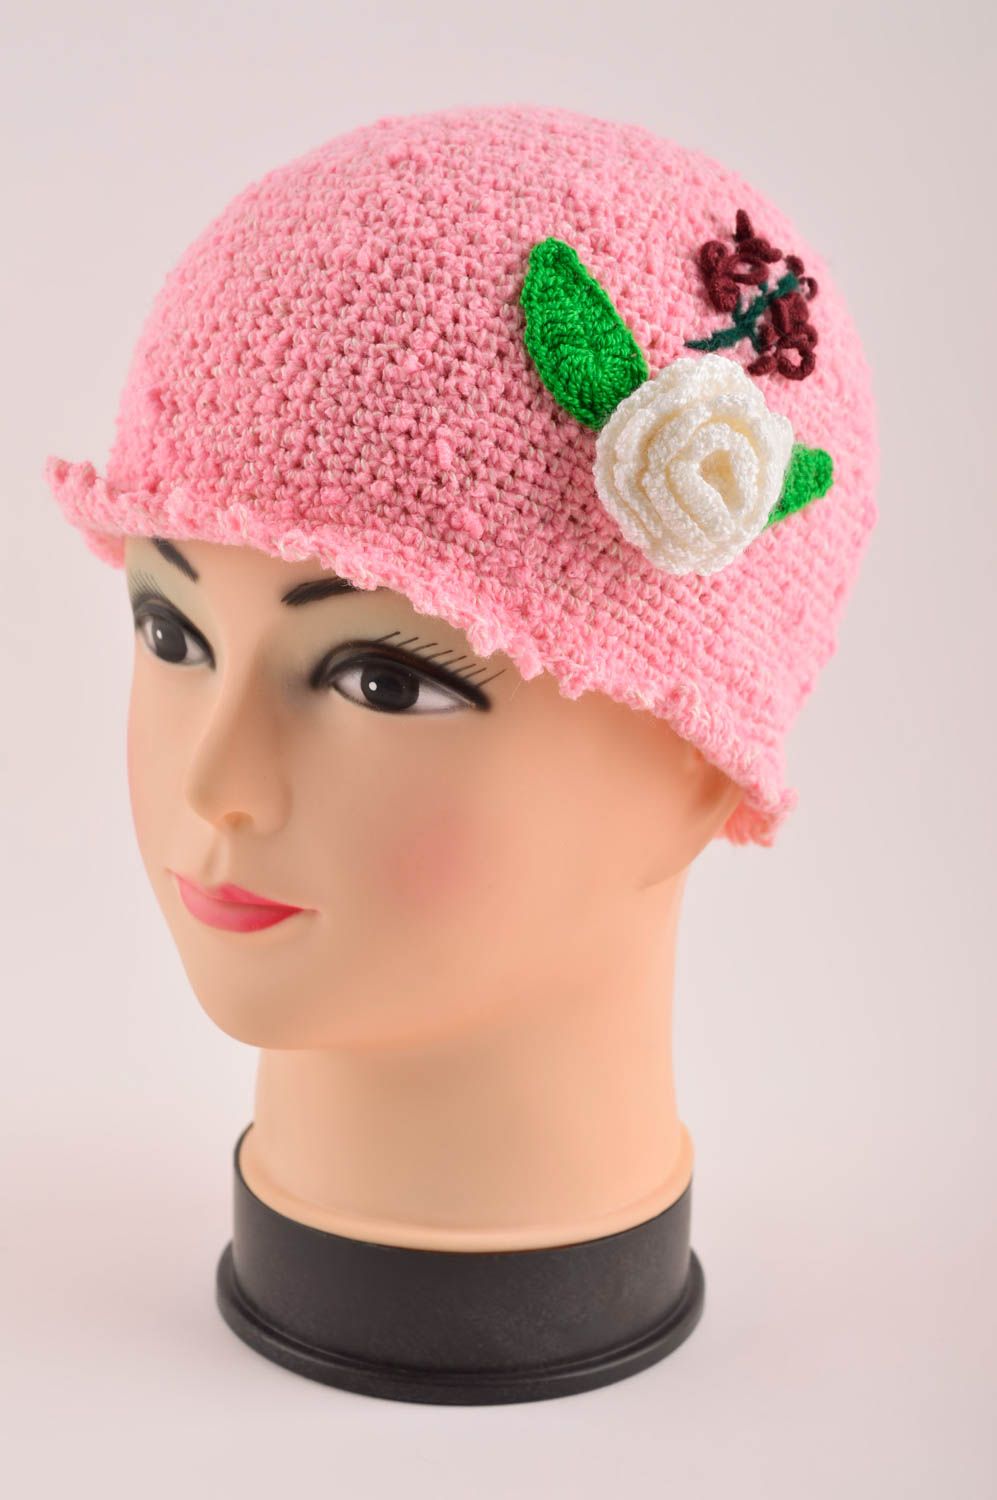 Handmade hat for winter unusual warm hat designer hat for baby gift ideas photo 2